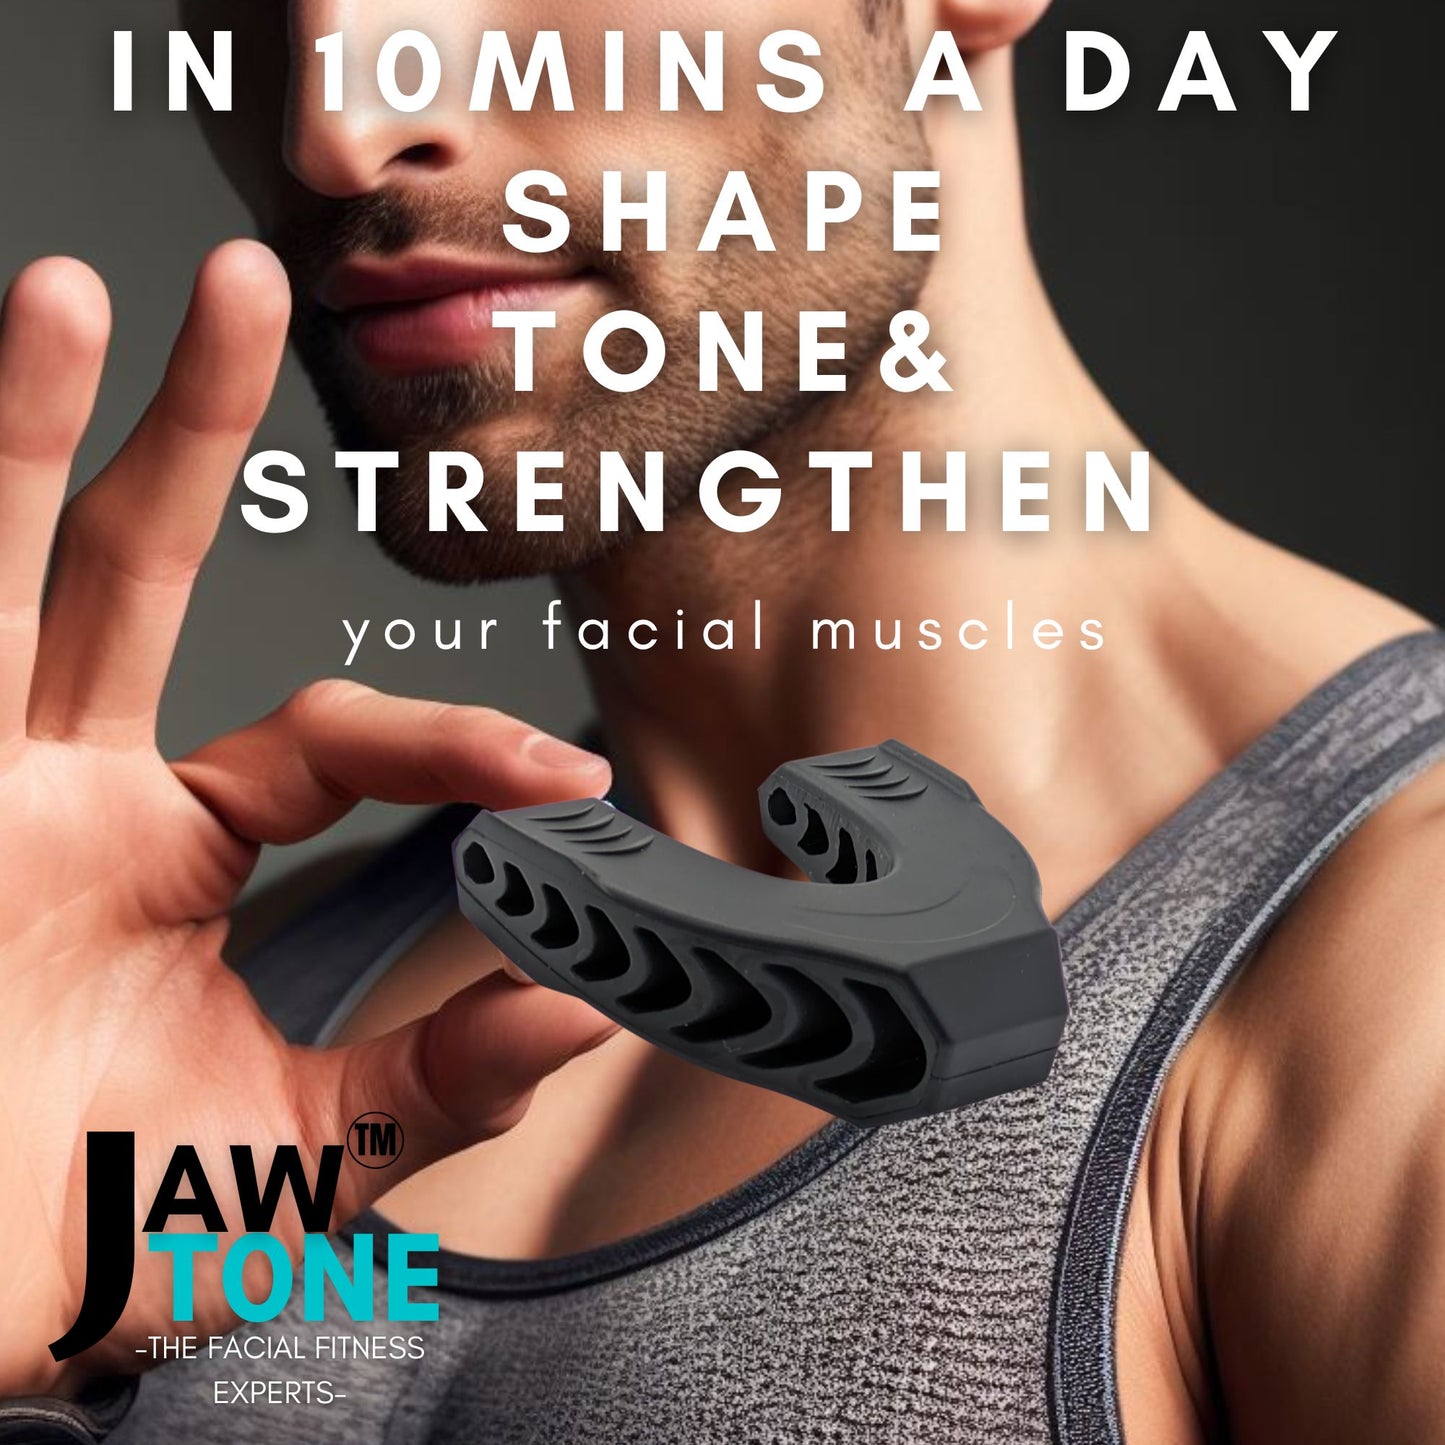 JawTone™ Jawline & TotalFACE Exerciser 2pc TOOLKIT - CHIN NECK CHEEKS JAW toning